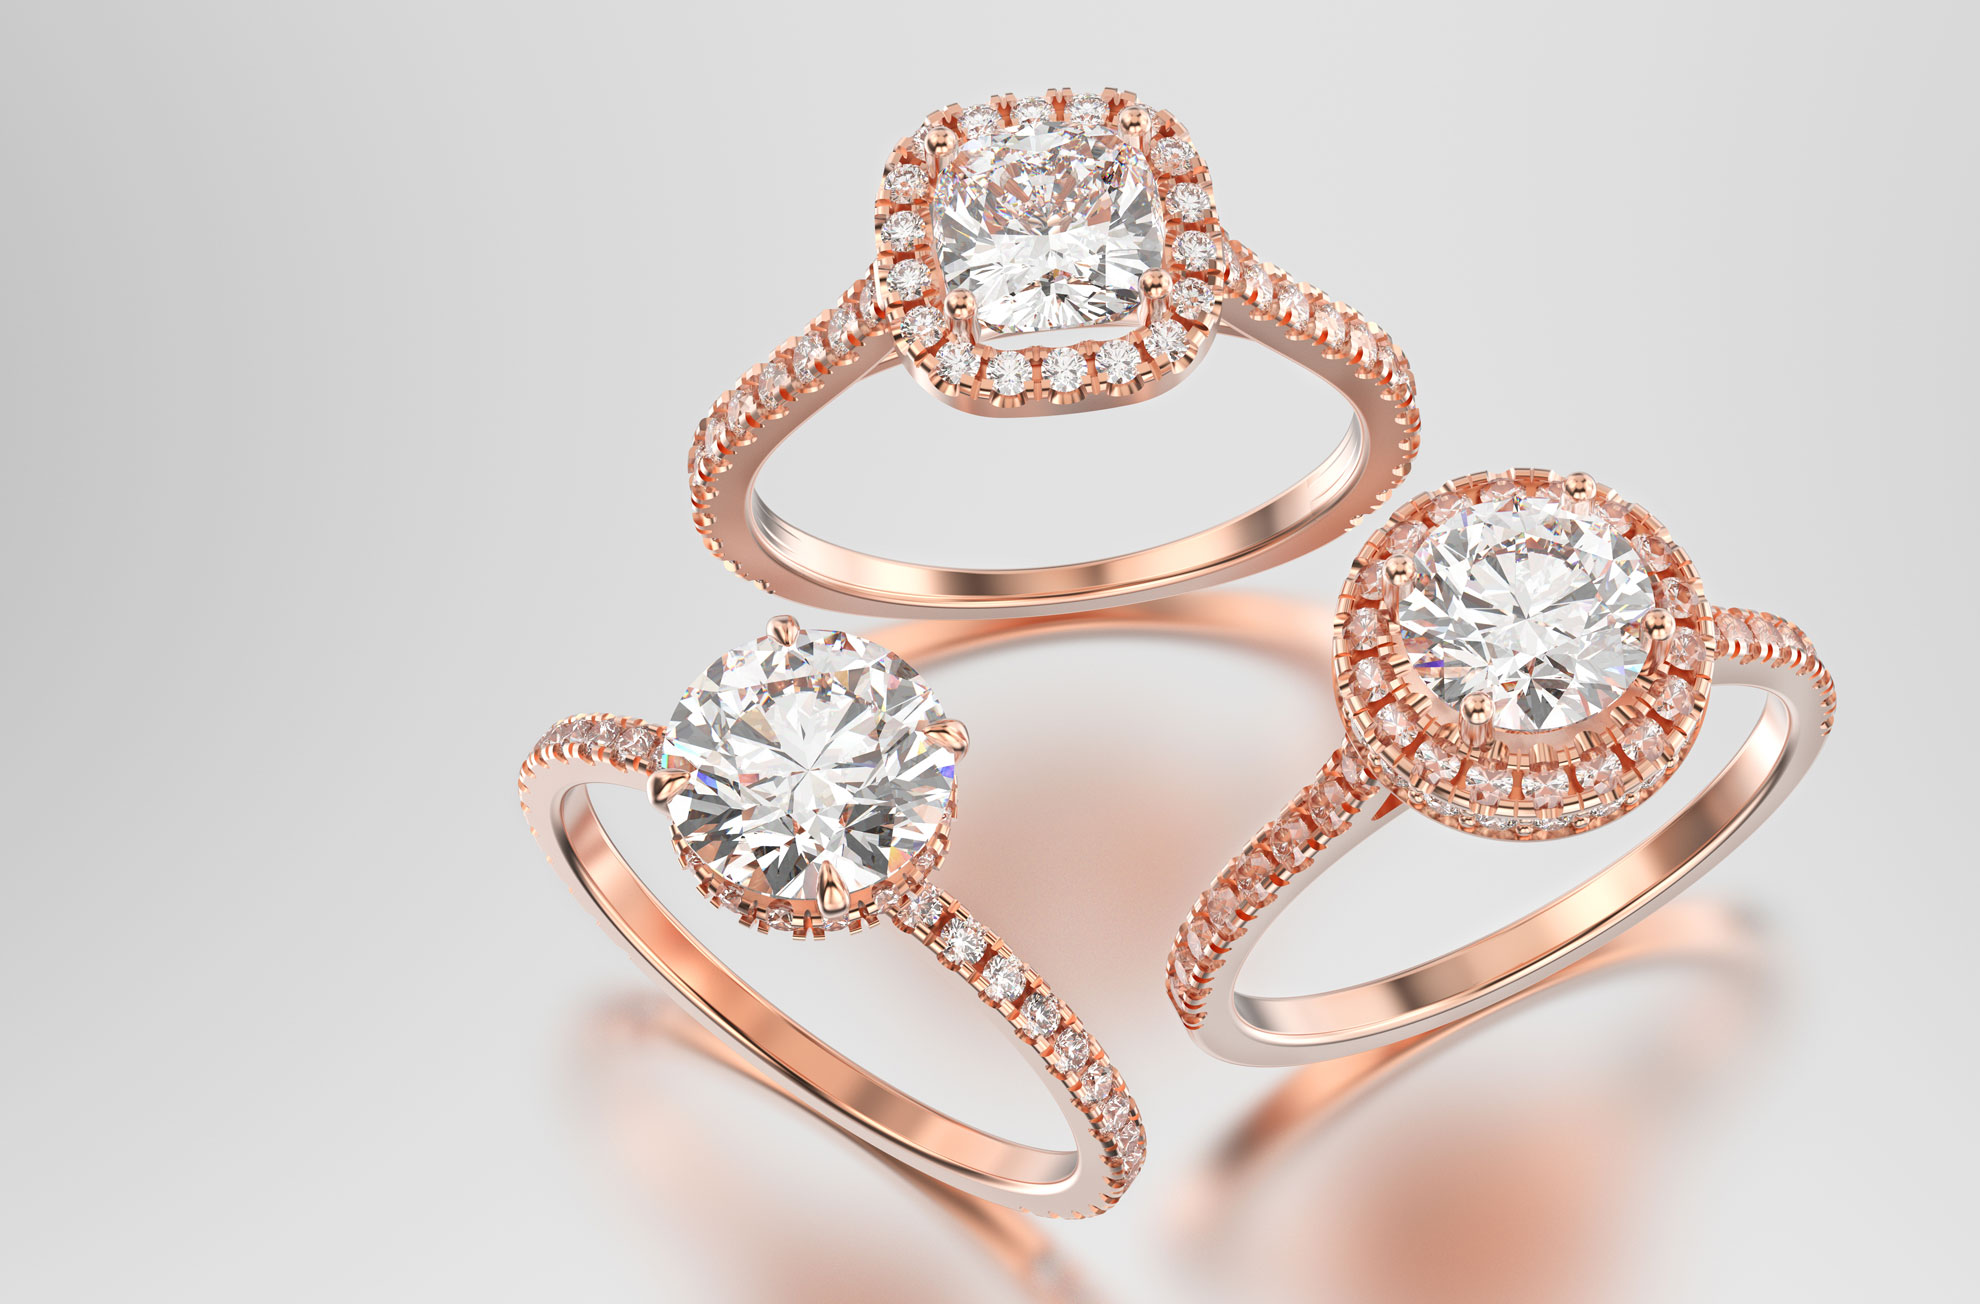 Engagement-rings